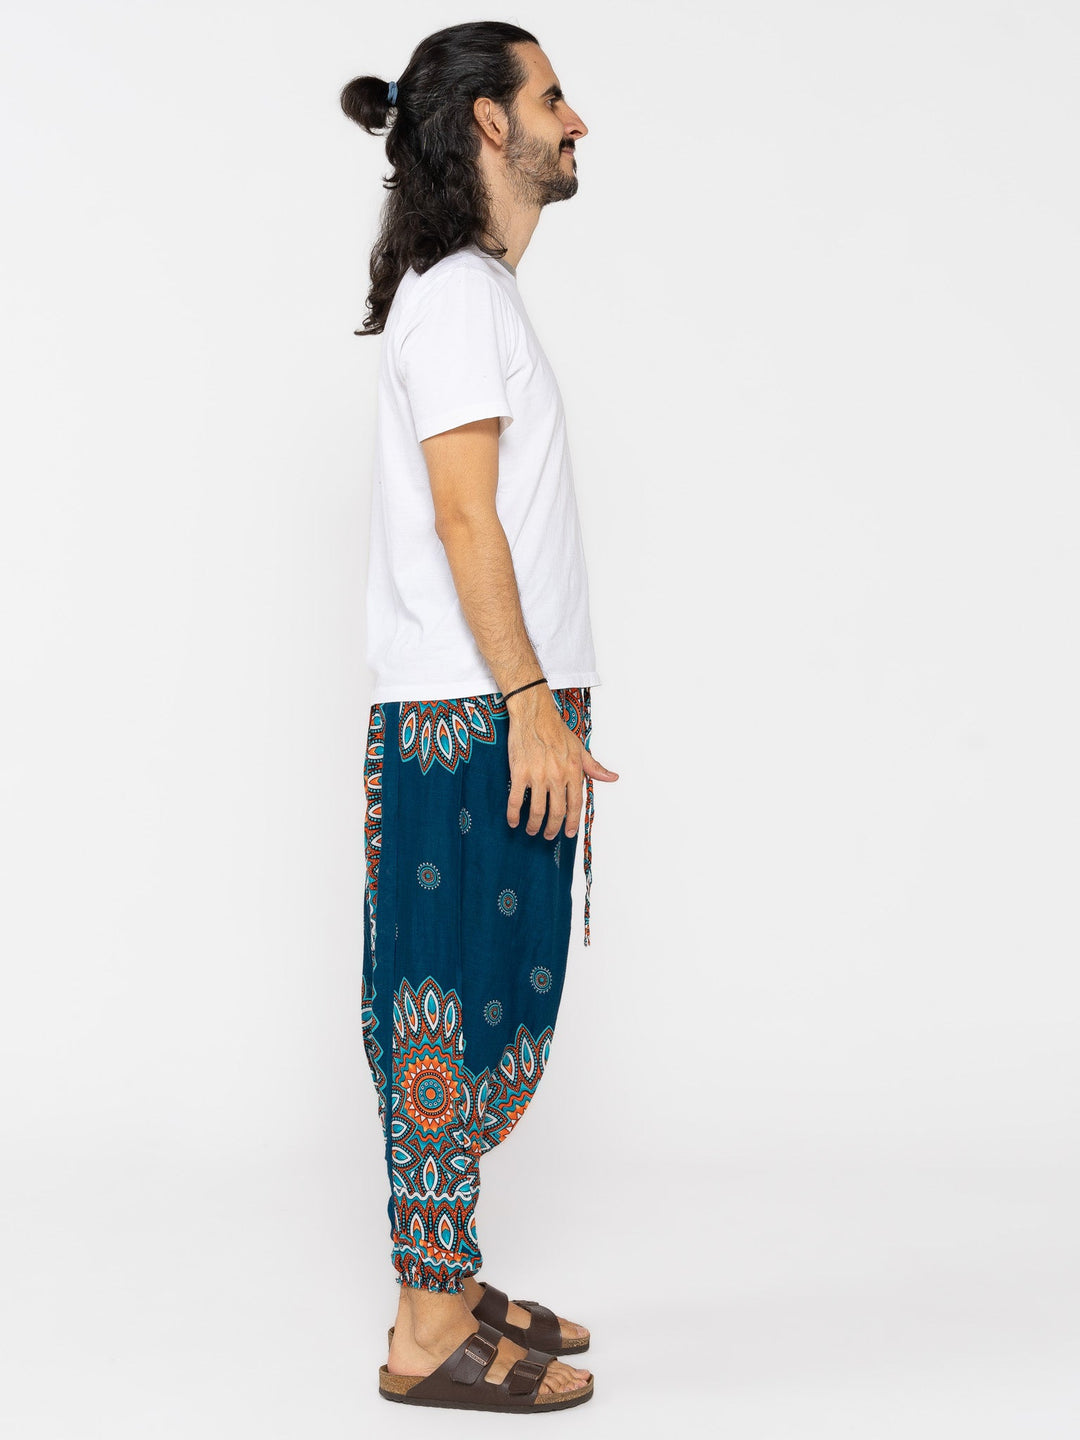 Mandala Turquesa - Pantsforlove Pantalones anchos, pantalones yoga